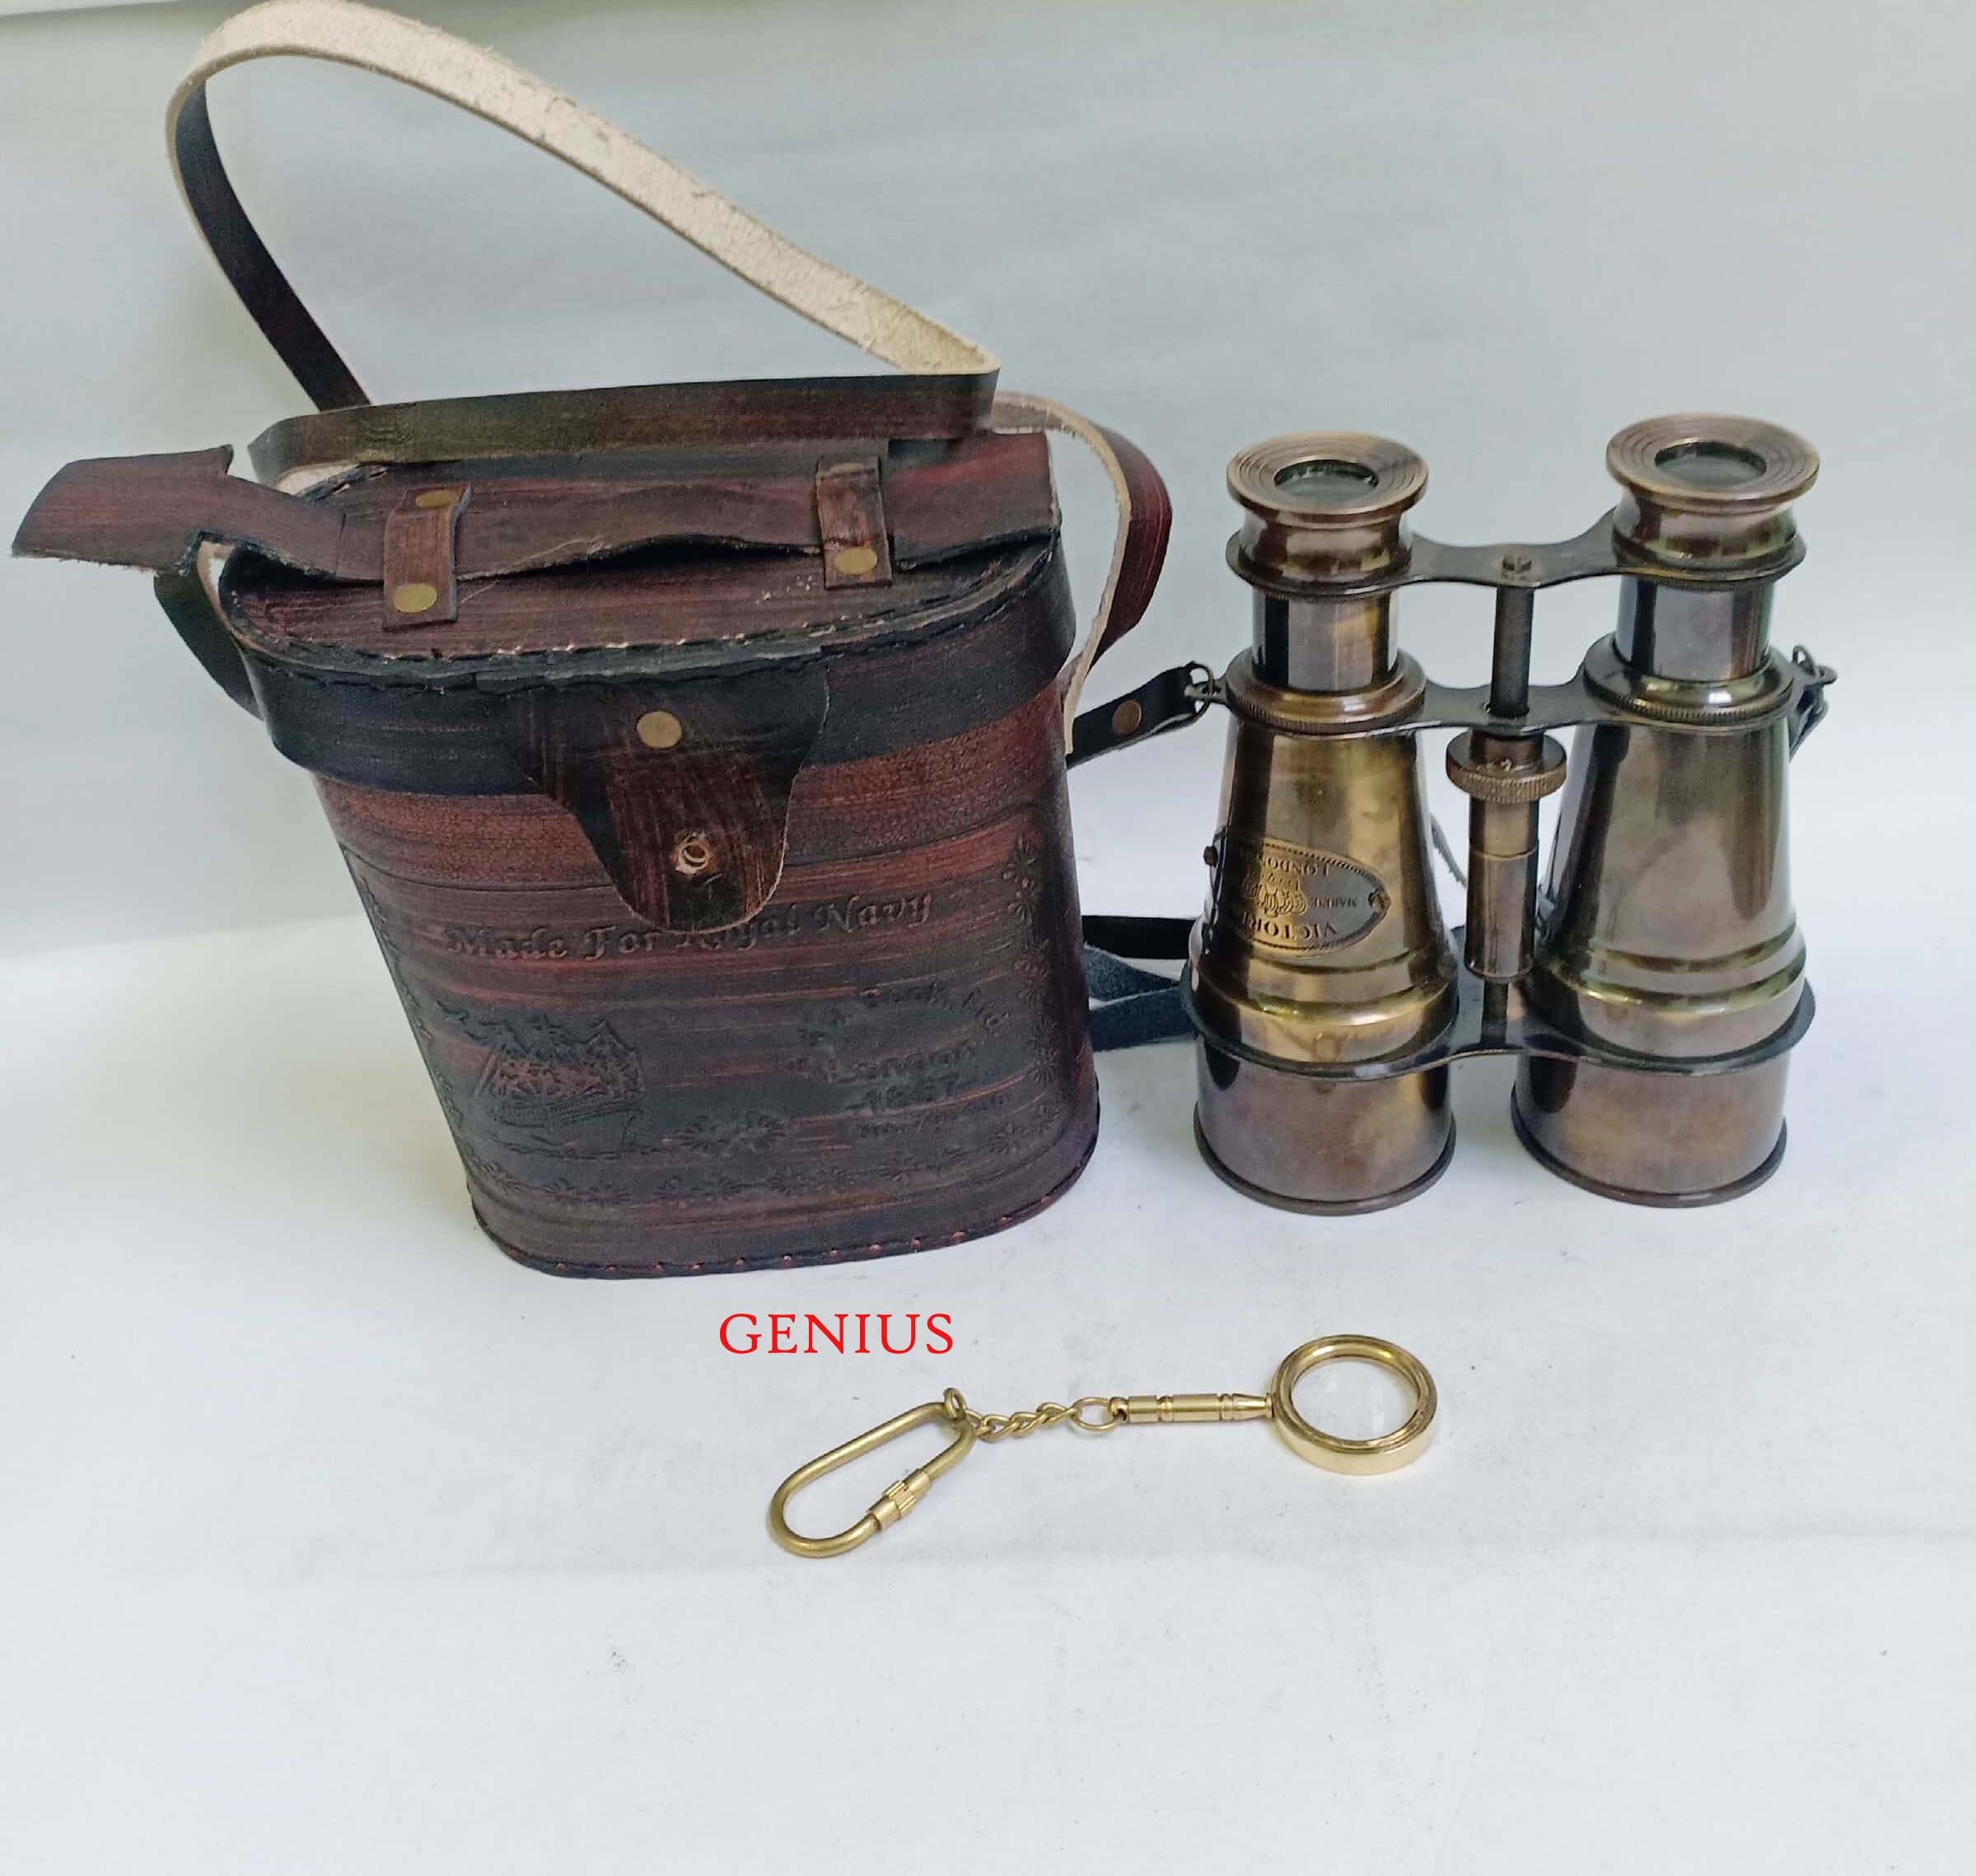 Spyglass/Binocular Brass Nautical Binocular w/Leather Belt 6" Nautical Gift 